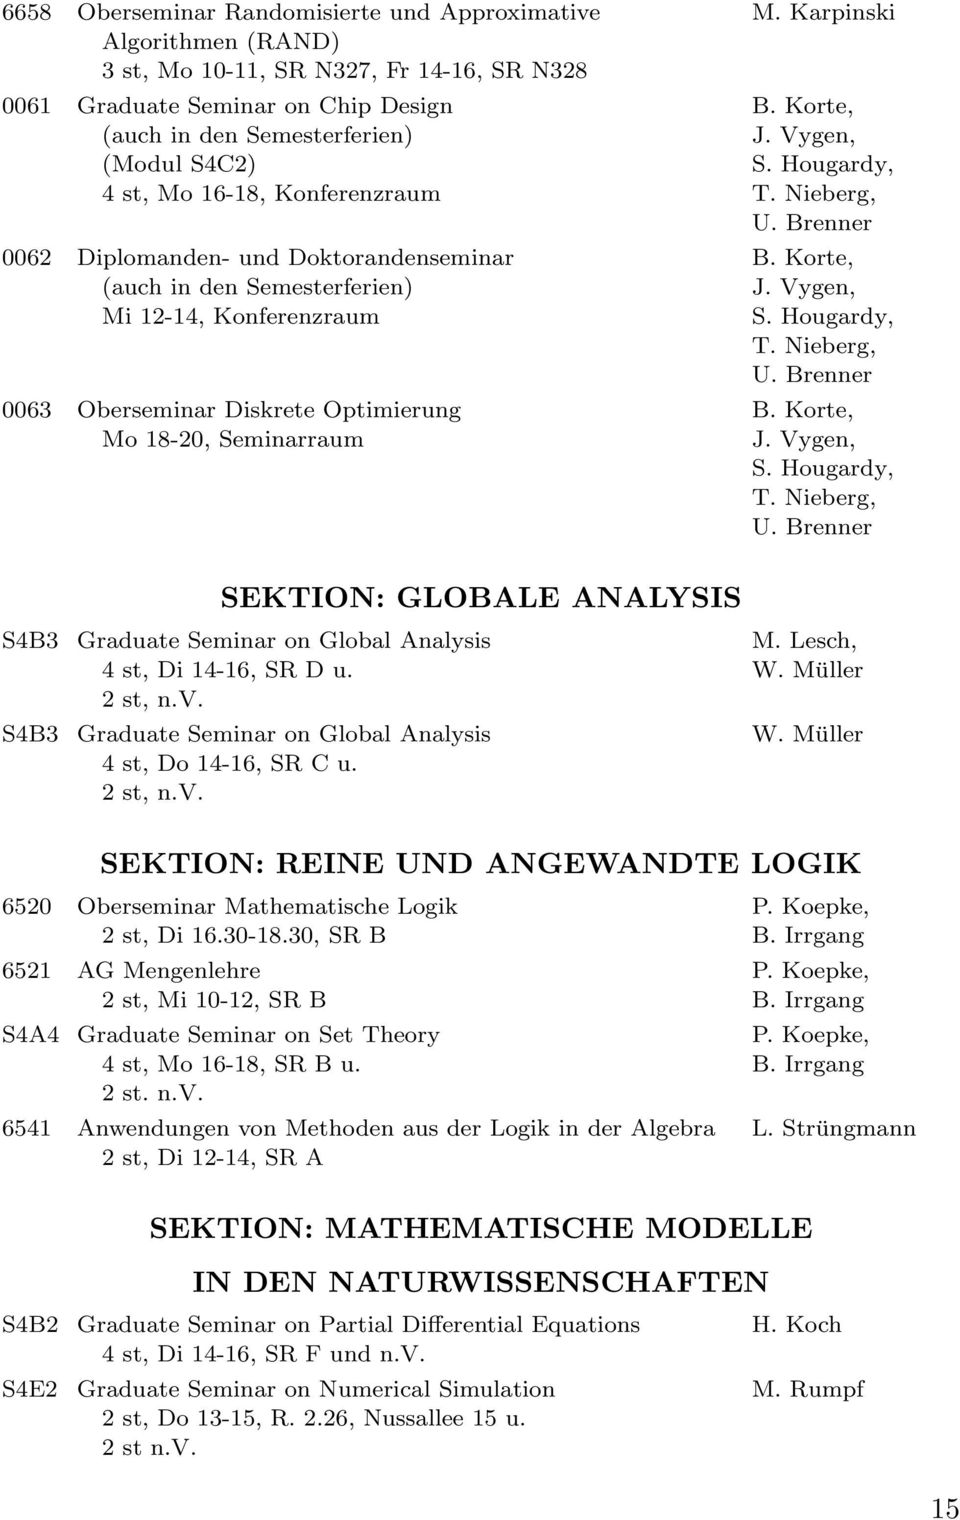 Karpinski S4B3 S4B3 SEKTION: GLOBALE ANALYSIS Graduate Seminar on Global Analysis 4 st, Di 14-16, SR D u. Graduate Seminar on Global Analysis 4 st, Do 14-16, SR C u. M. Lesch, W. Müller W.